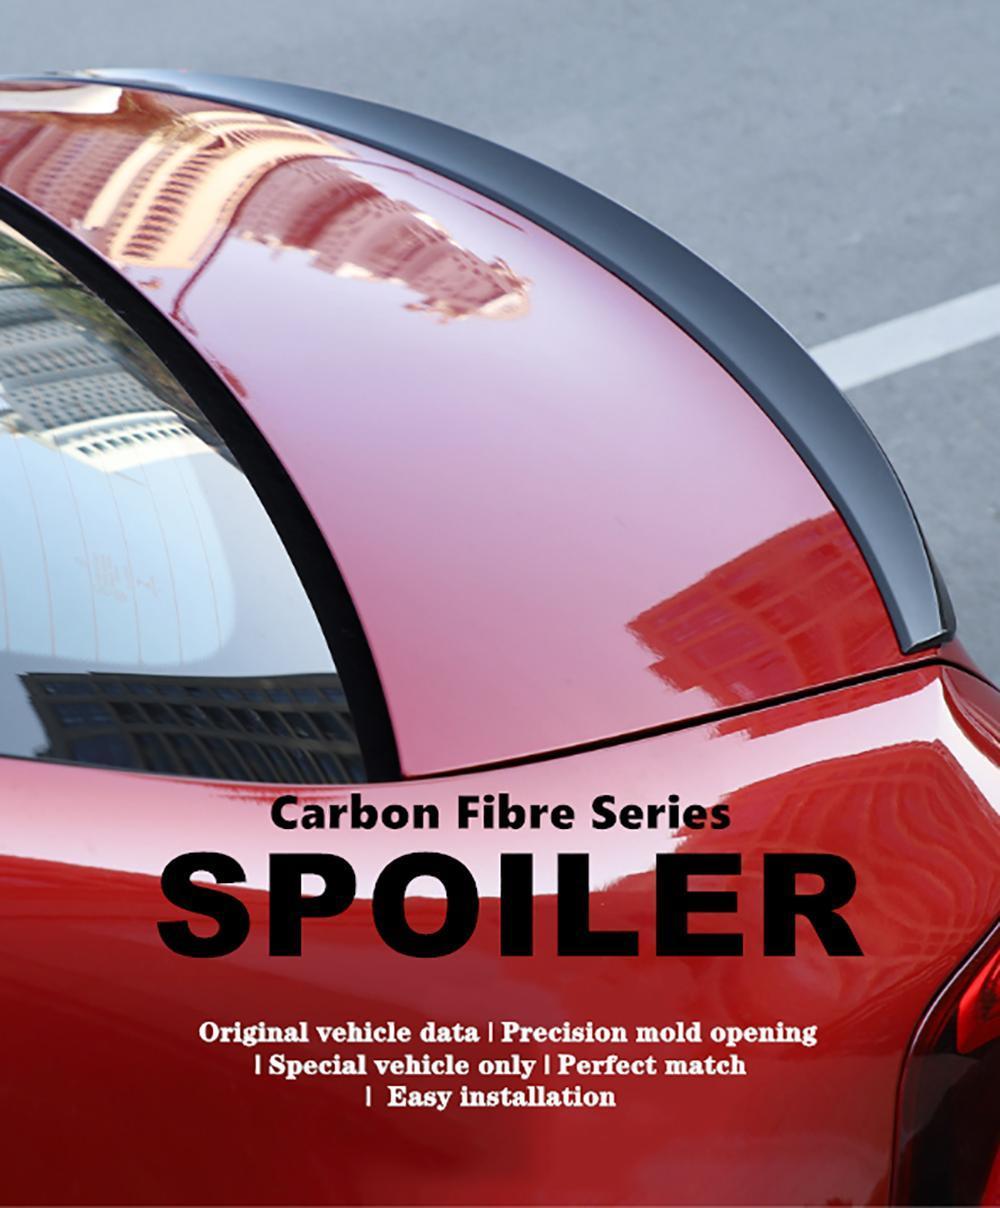 Carbon Fiber Vehicle Spoiler Rear Spoiler Car Spoiler for M4 Style Audi A6 Rear Trunk Spoiler 2016 2017 2018 2019